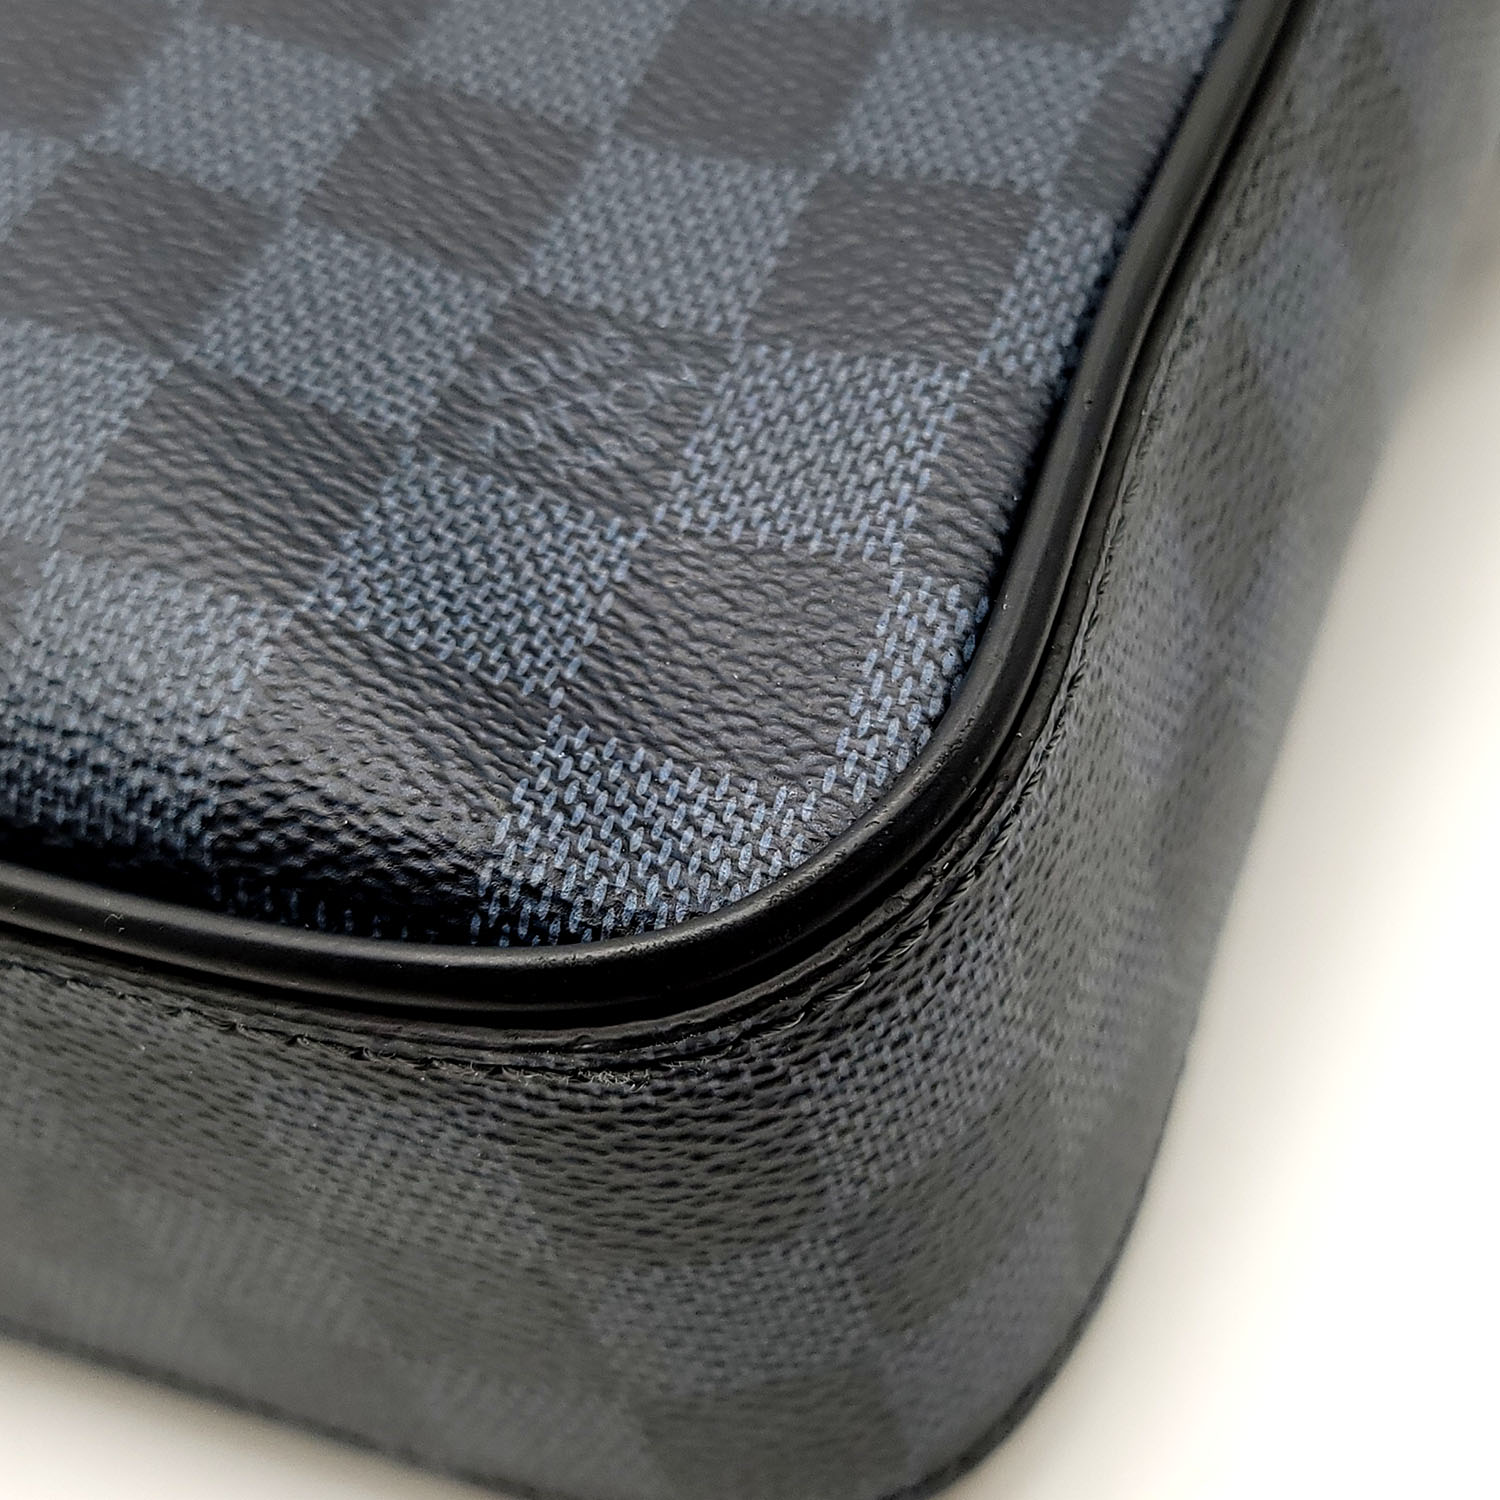 Louis Vuitton, Bags, Louis Vuitton Dandy Mm Briefcase Bleu Marine